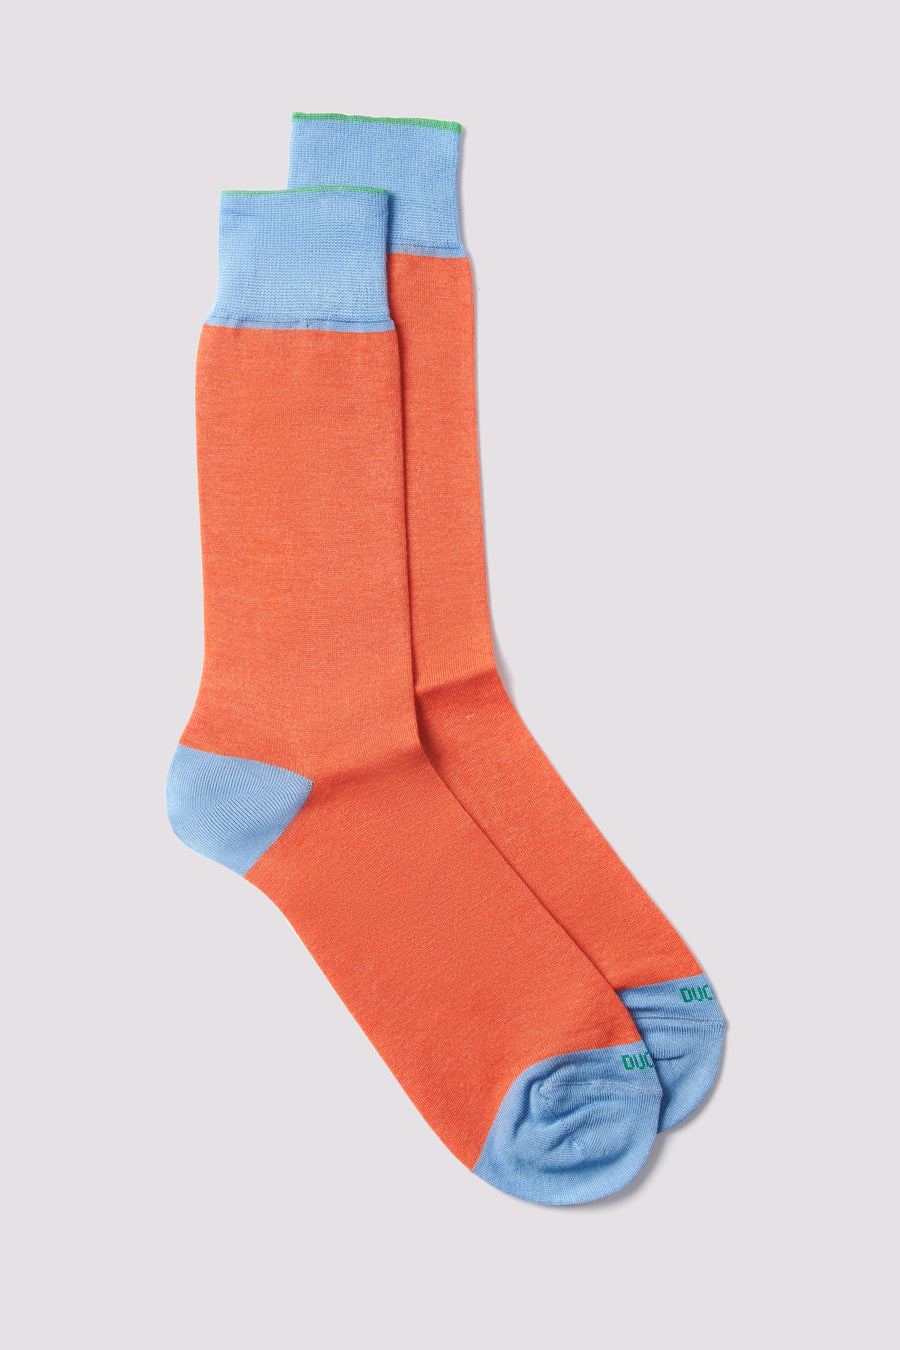 Heel Toe Sock Bright Orange